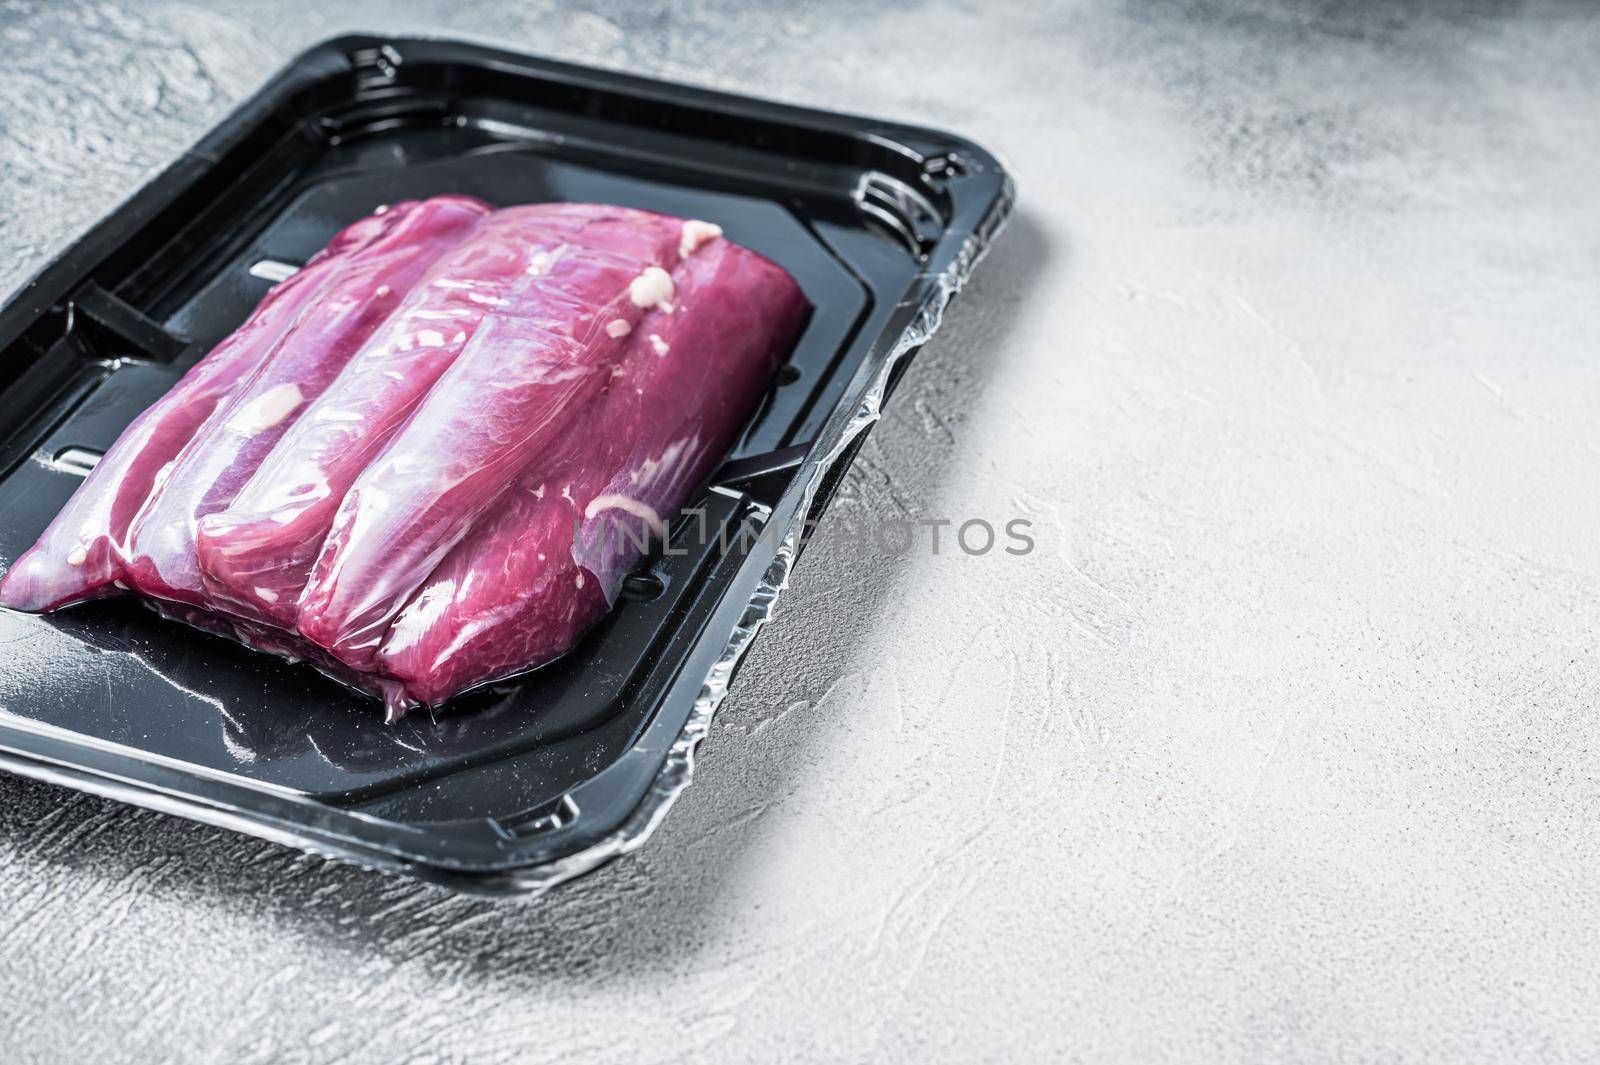 Raw lamb tenderloin in vacuum packaging. White background. Top view. Copy space.